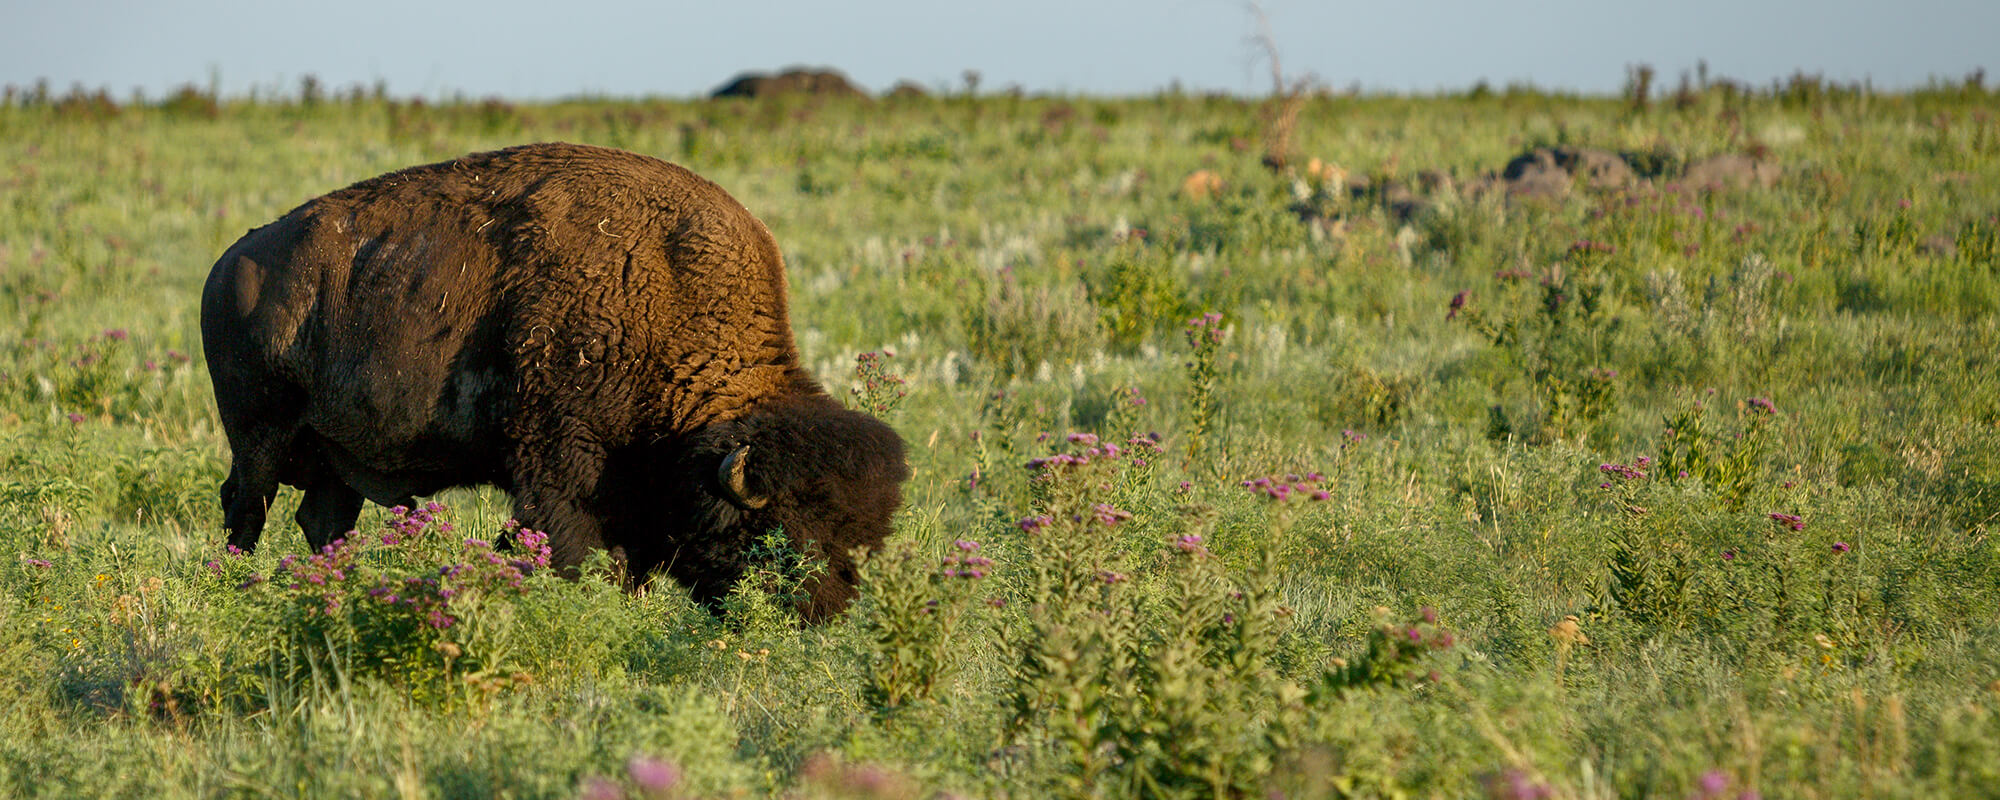 single bison grazing in field